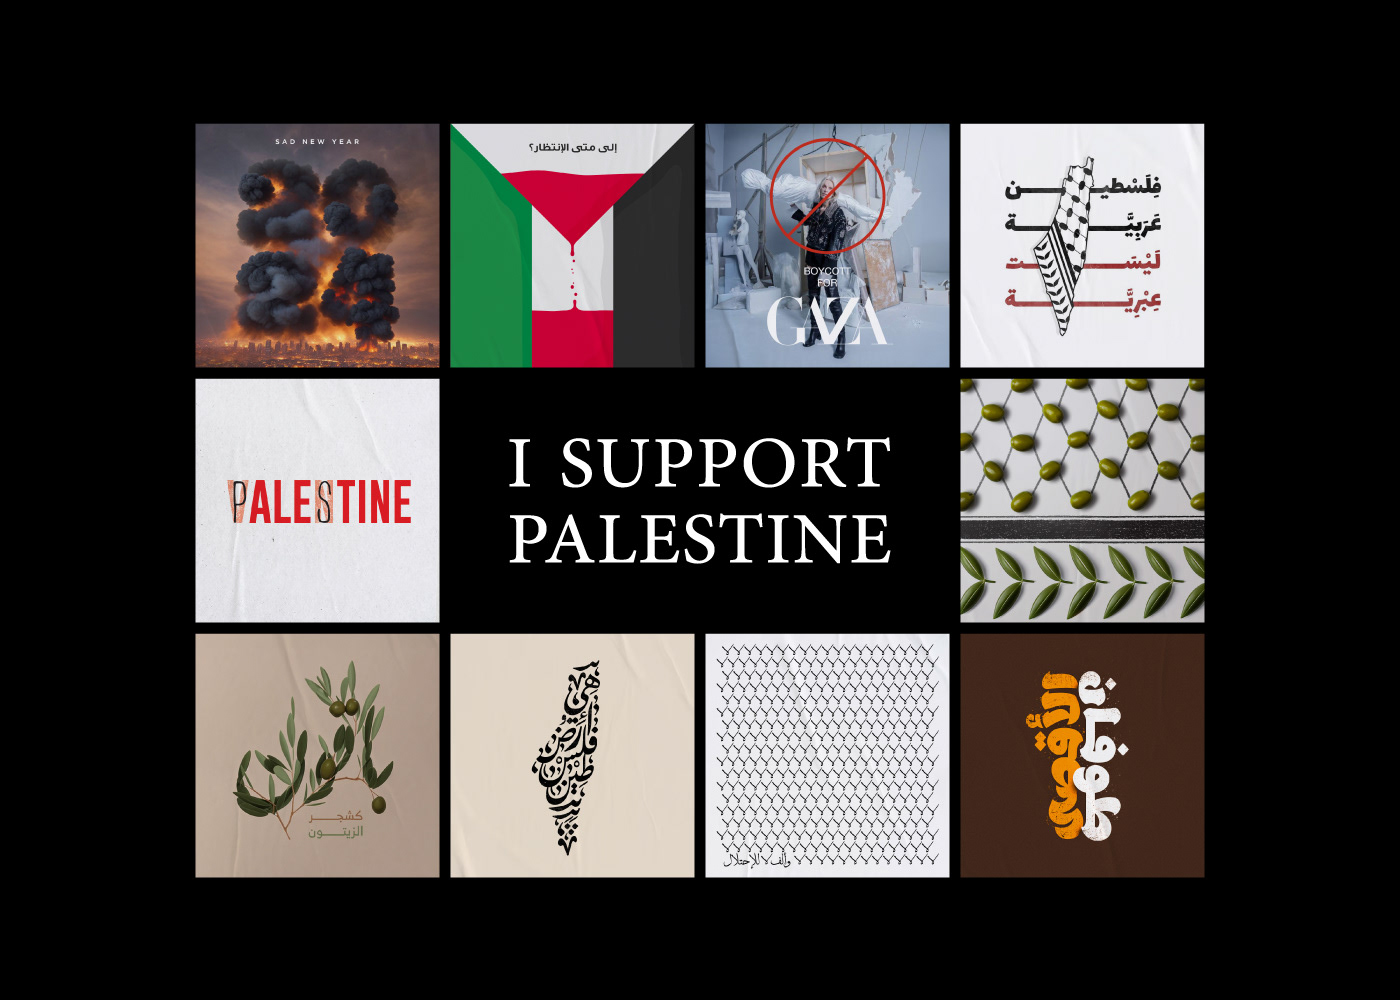 palestine gaza War israel freepalestine posters creative support arabic gazaunderattack